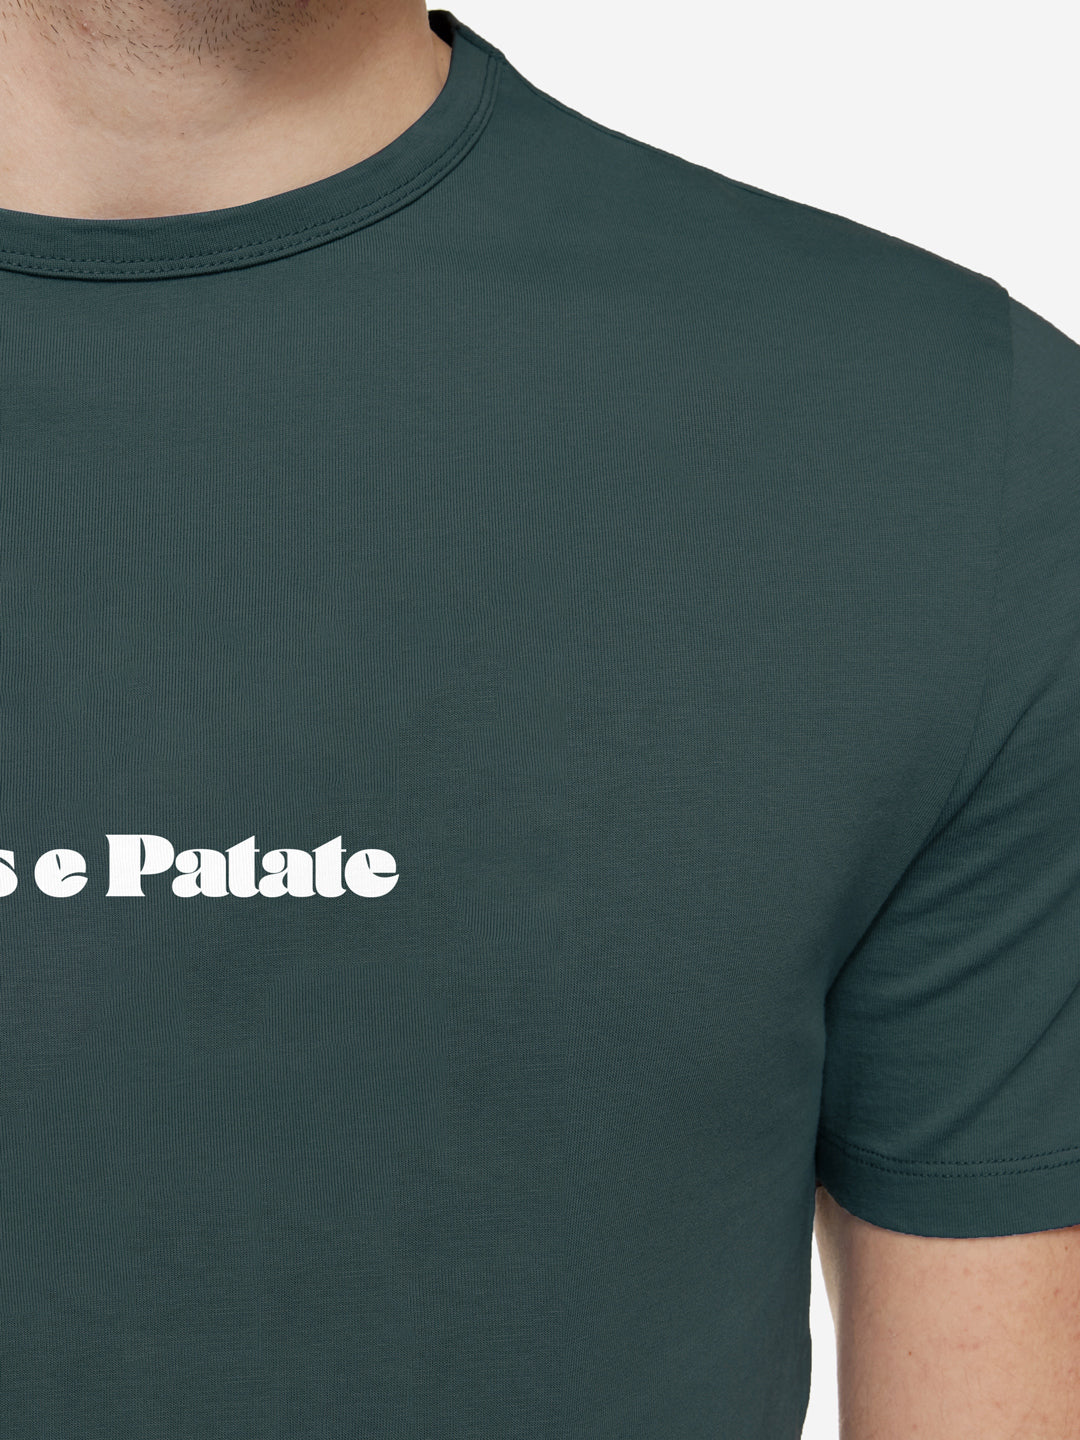 Chasse Patate - T-shirt